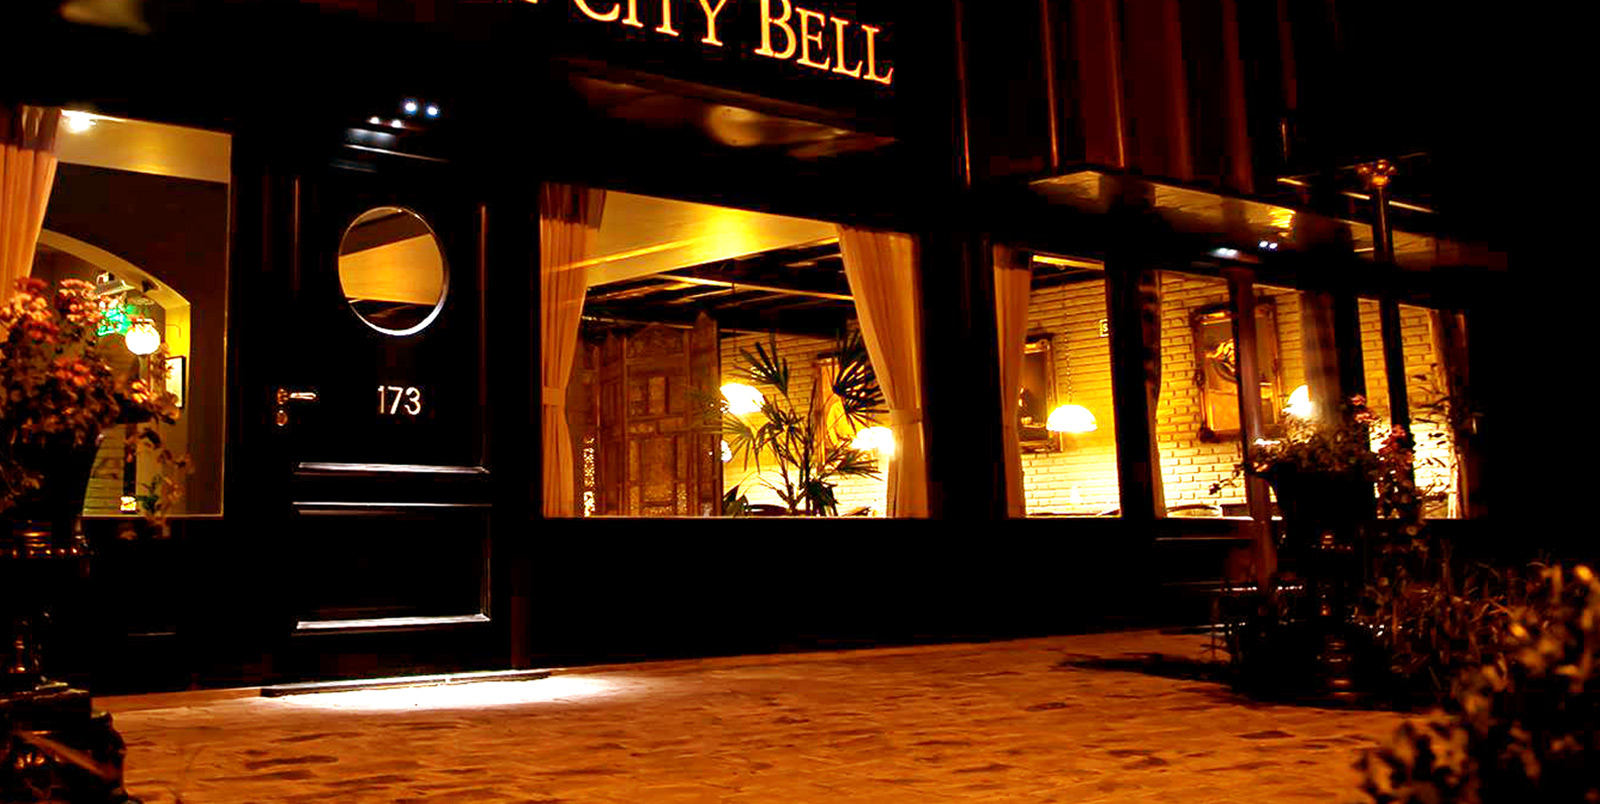 Hotel City Bell